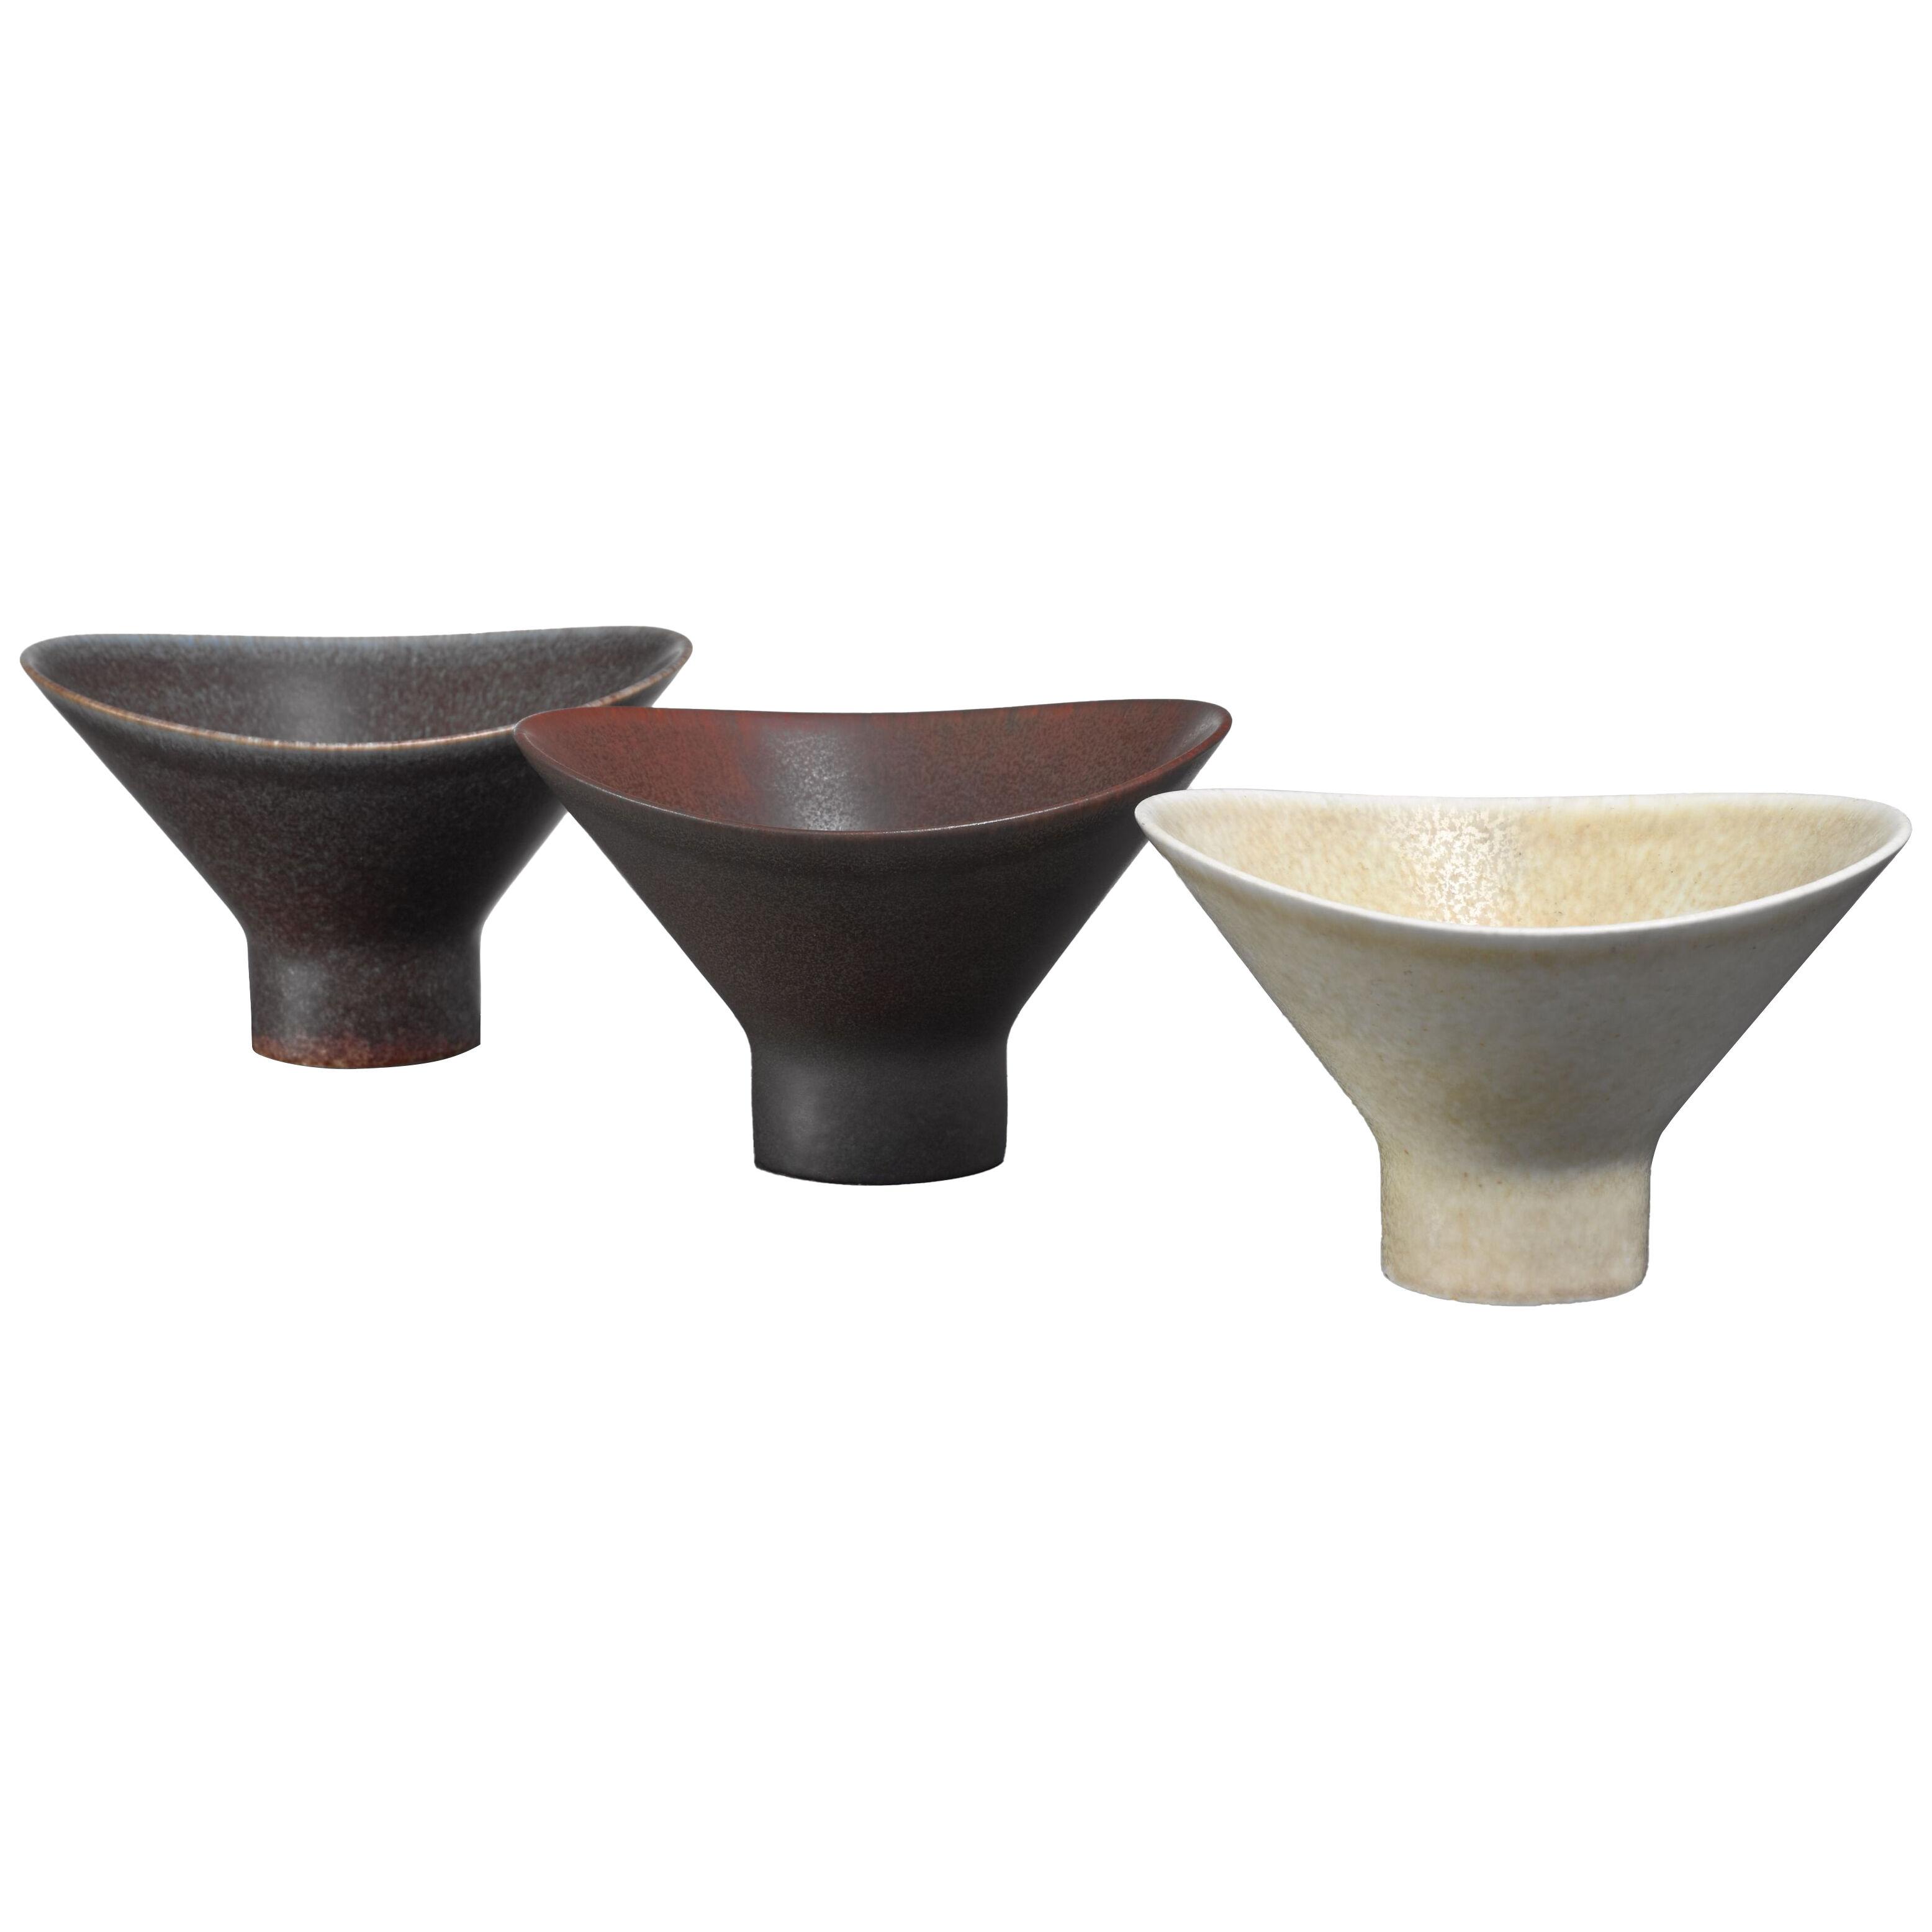 Carl-Harry Stålhane set of three ceramic bowls, Sweden